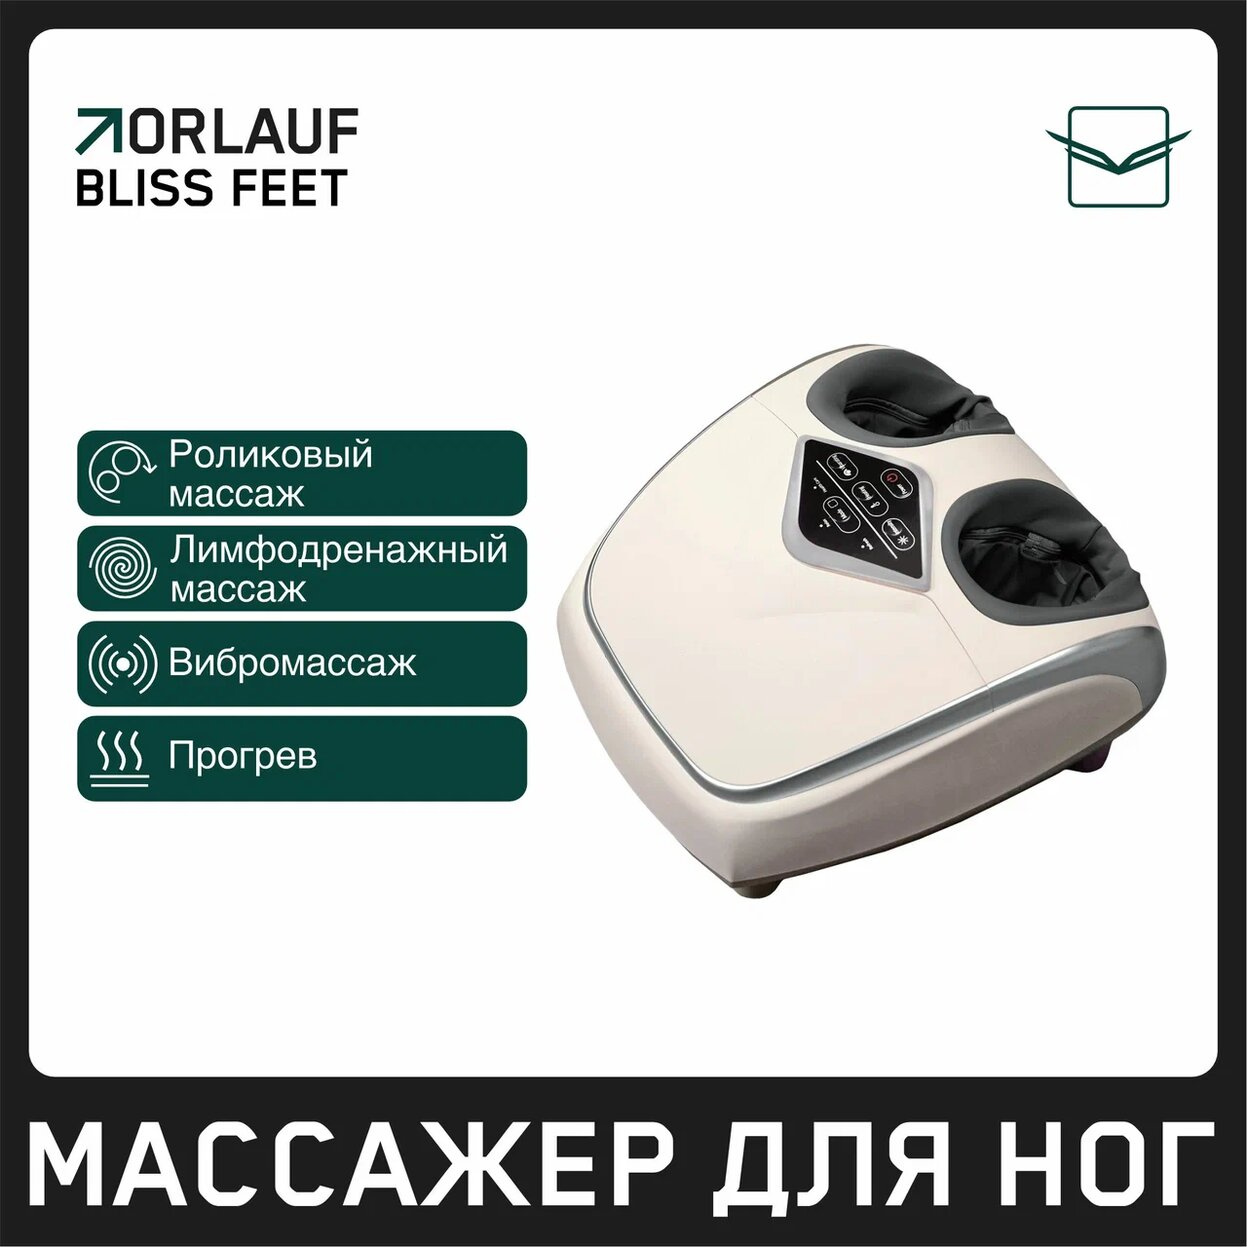 Bliss Feet в Омске по цене 27600 ₽ в категории массажеры для ног Orlauf